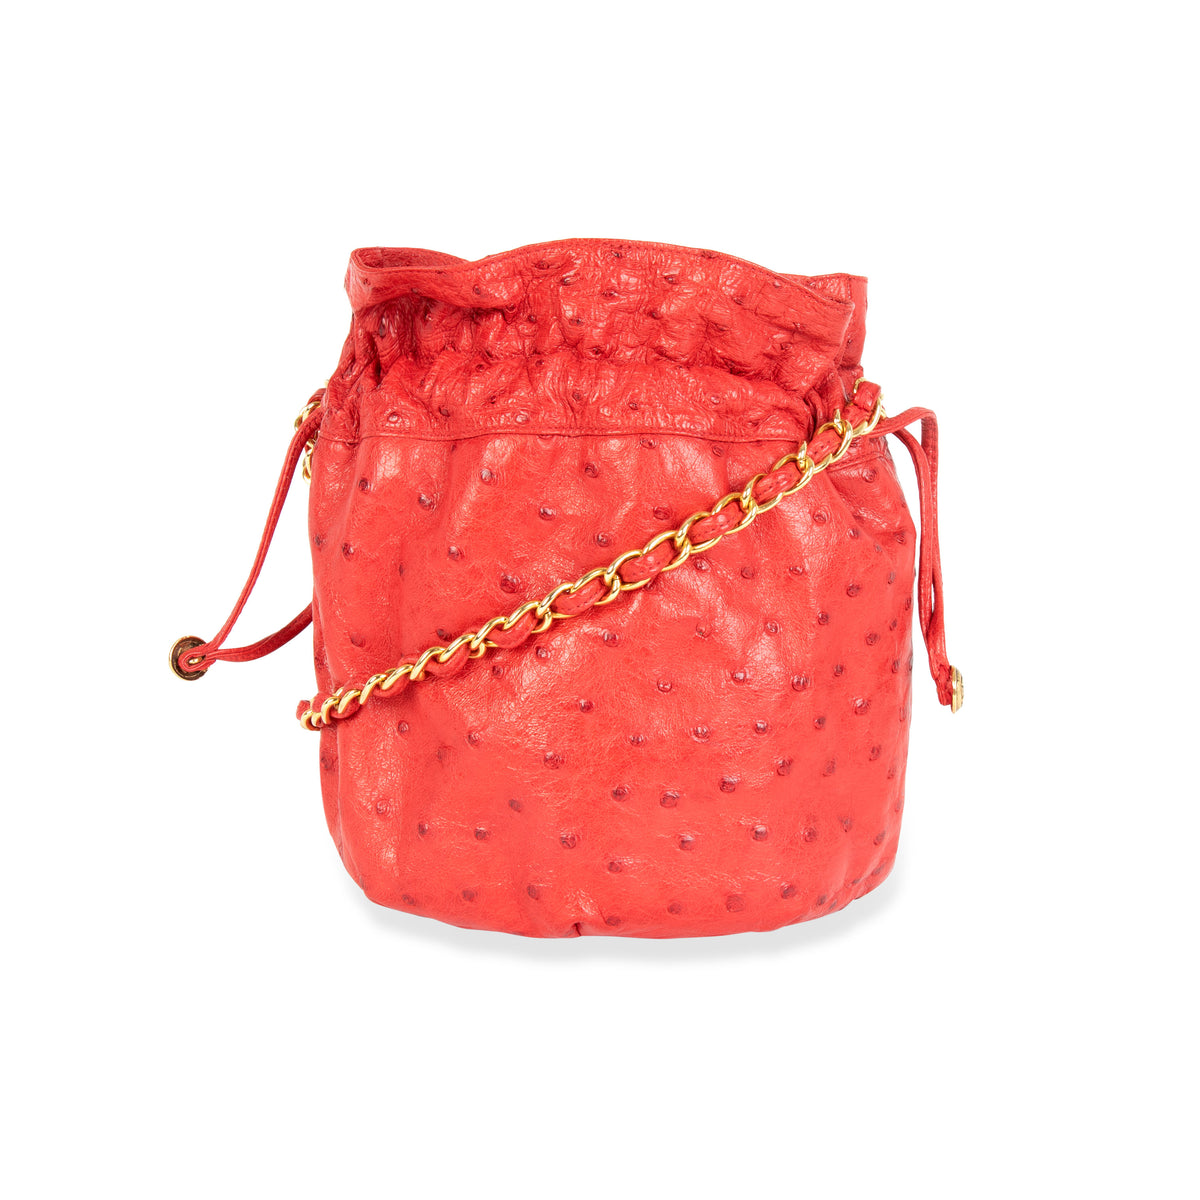 Chanel Melrose Coco Cabas Chain Drawstring Satin Shoulder Bag